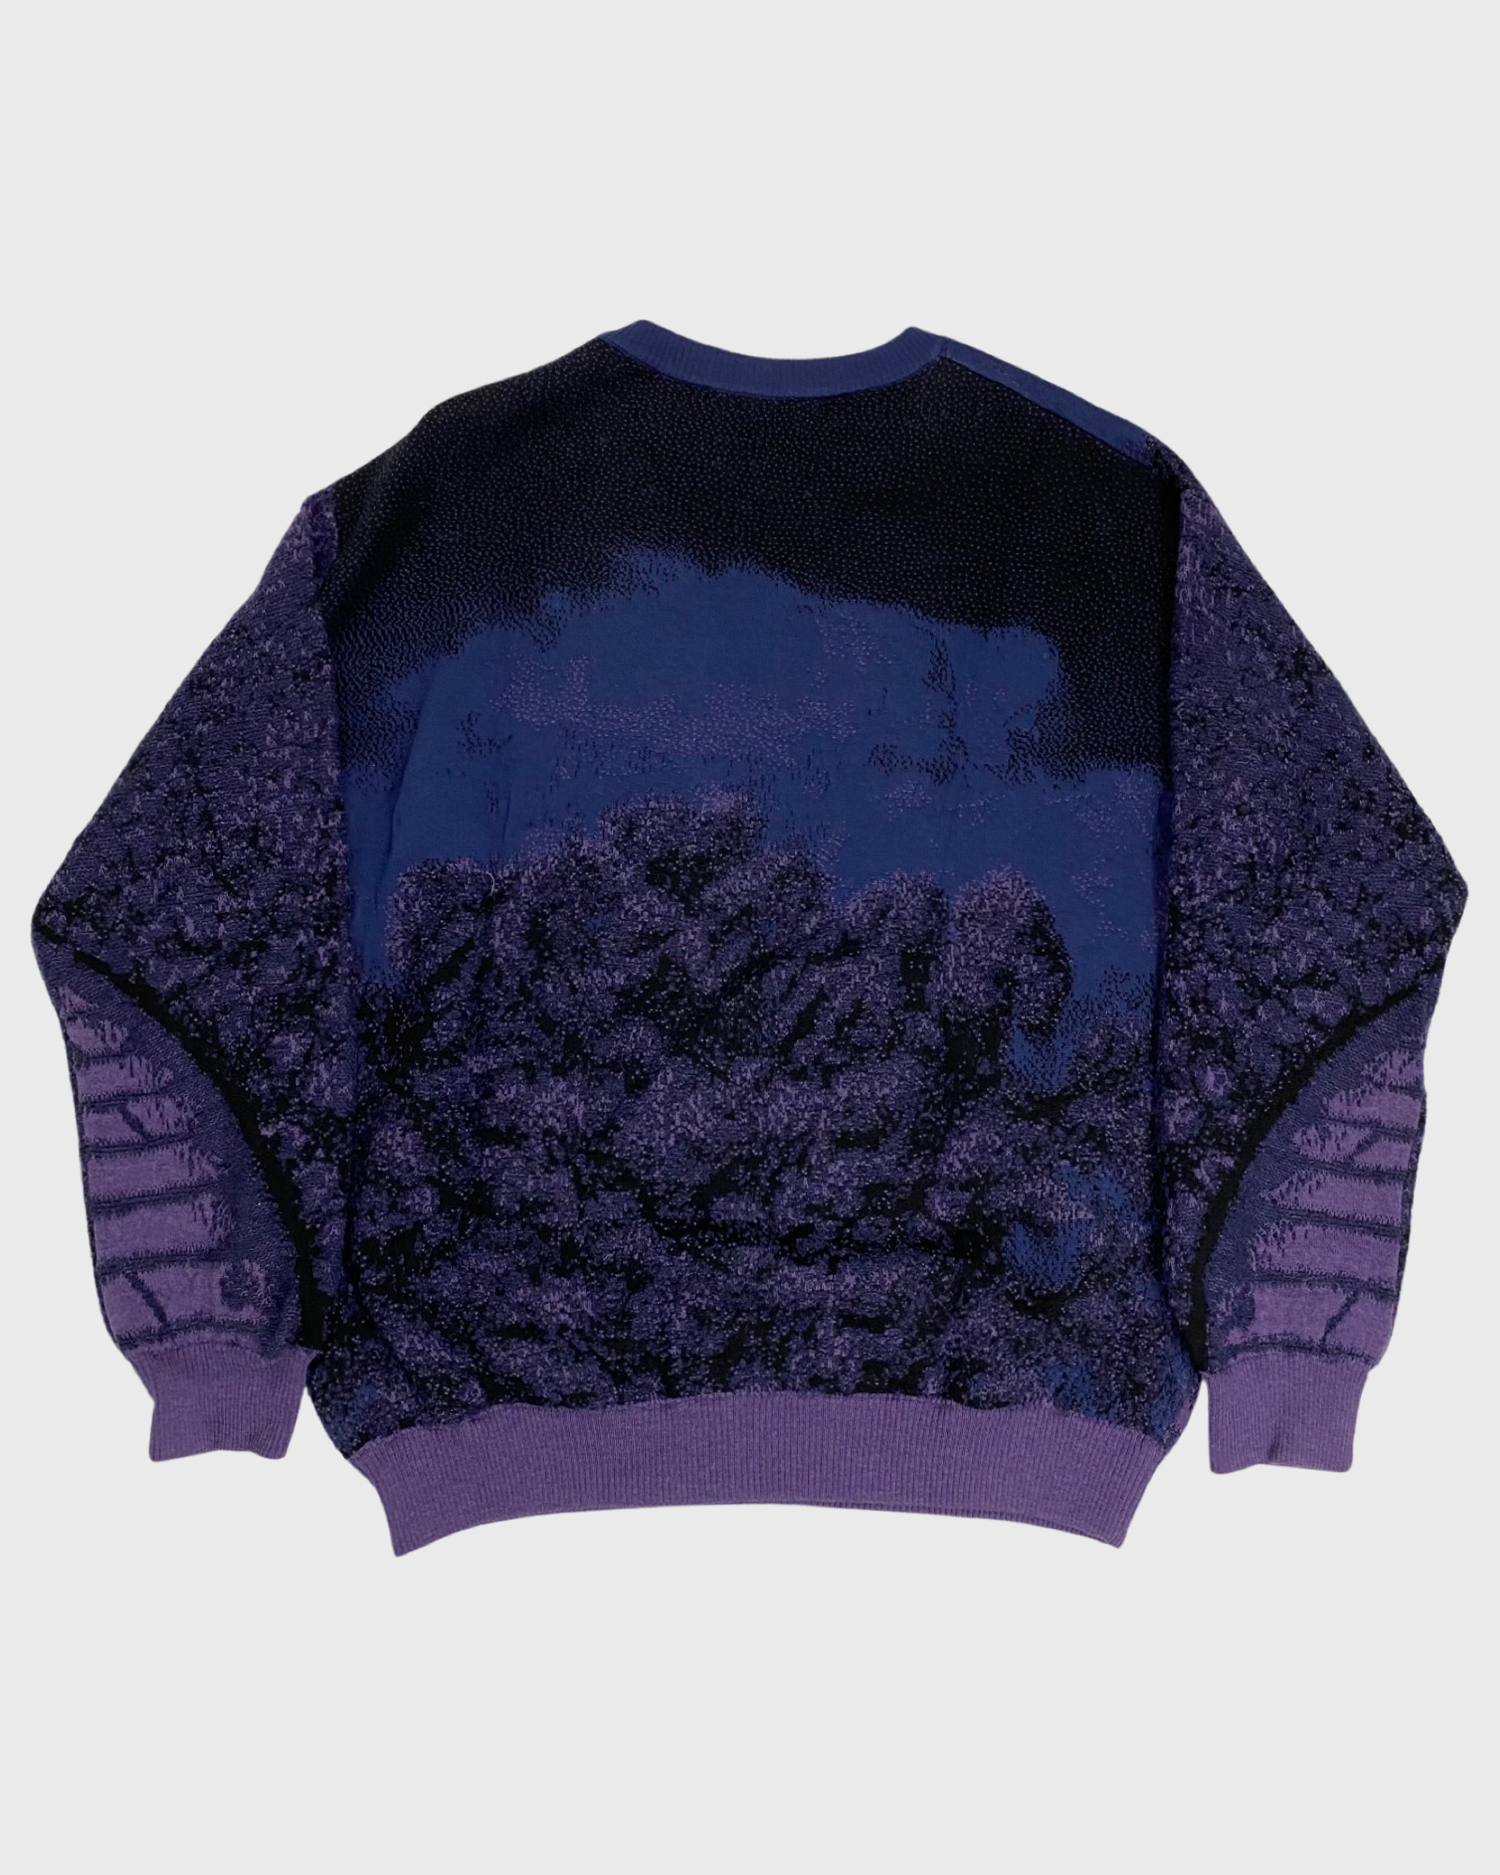 Louis Vuitton Yellow Brick Road Sweater : r/AC_DesignerFashion